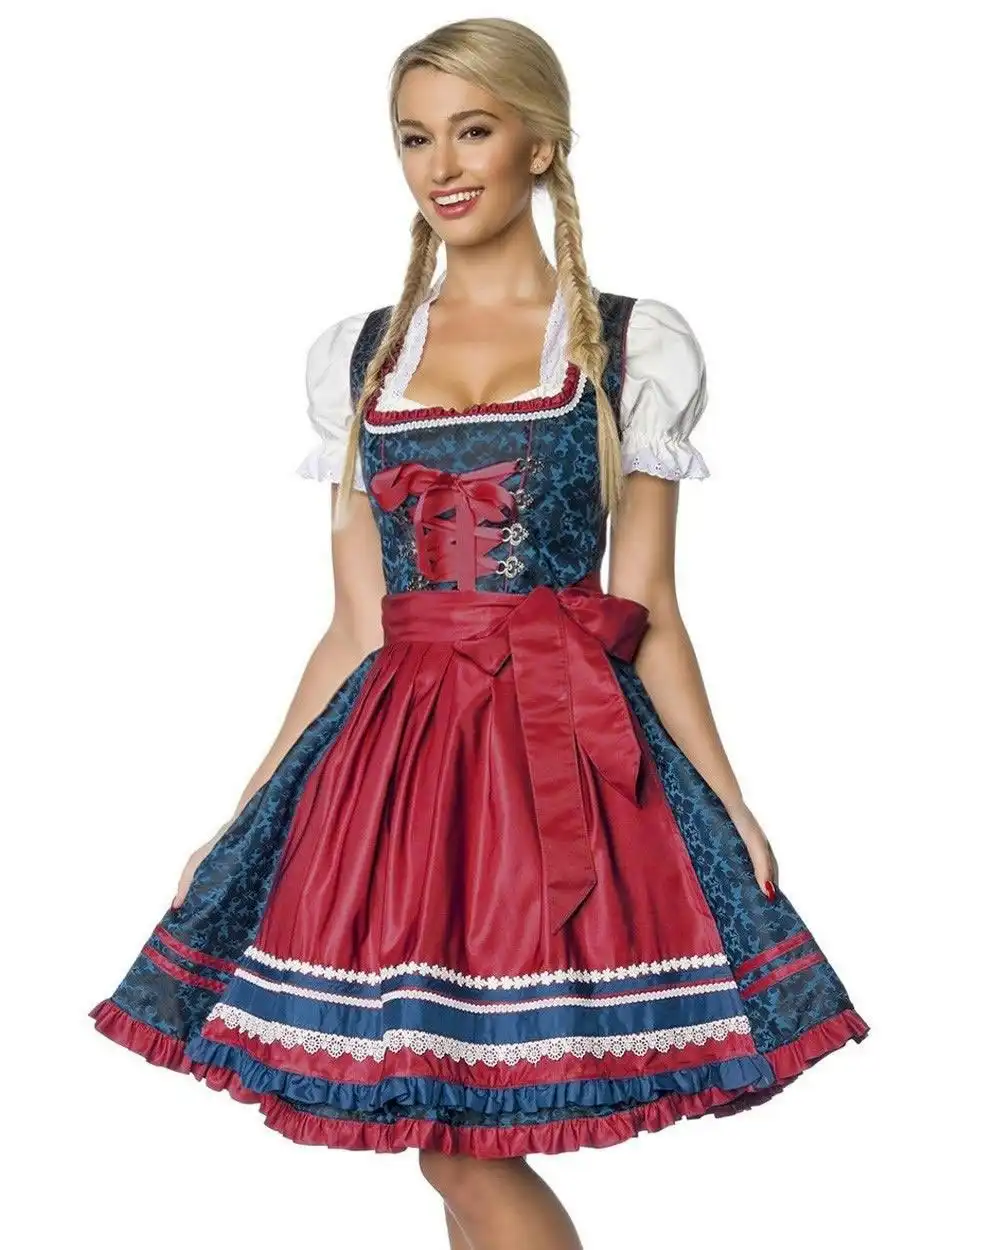 Swiss Girl Beer Oktoberfest Womens Costume